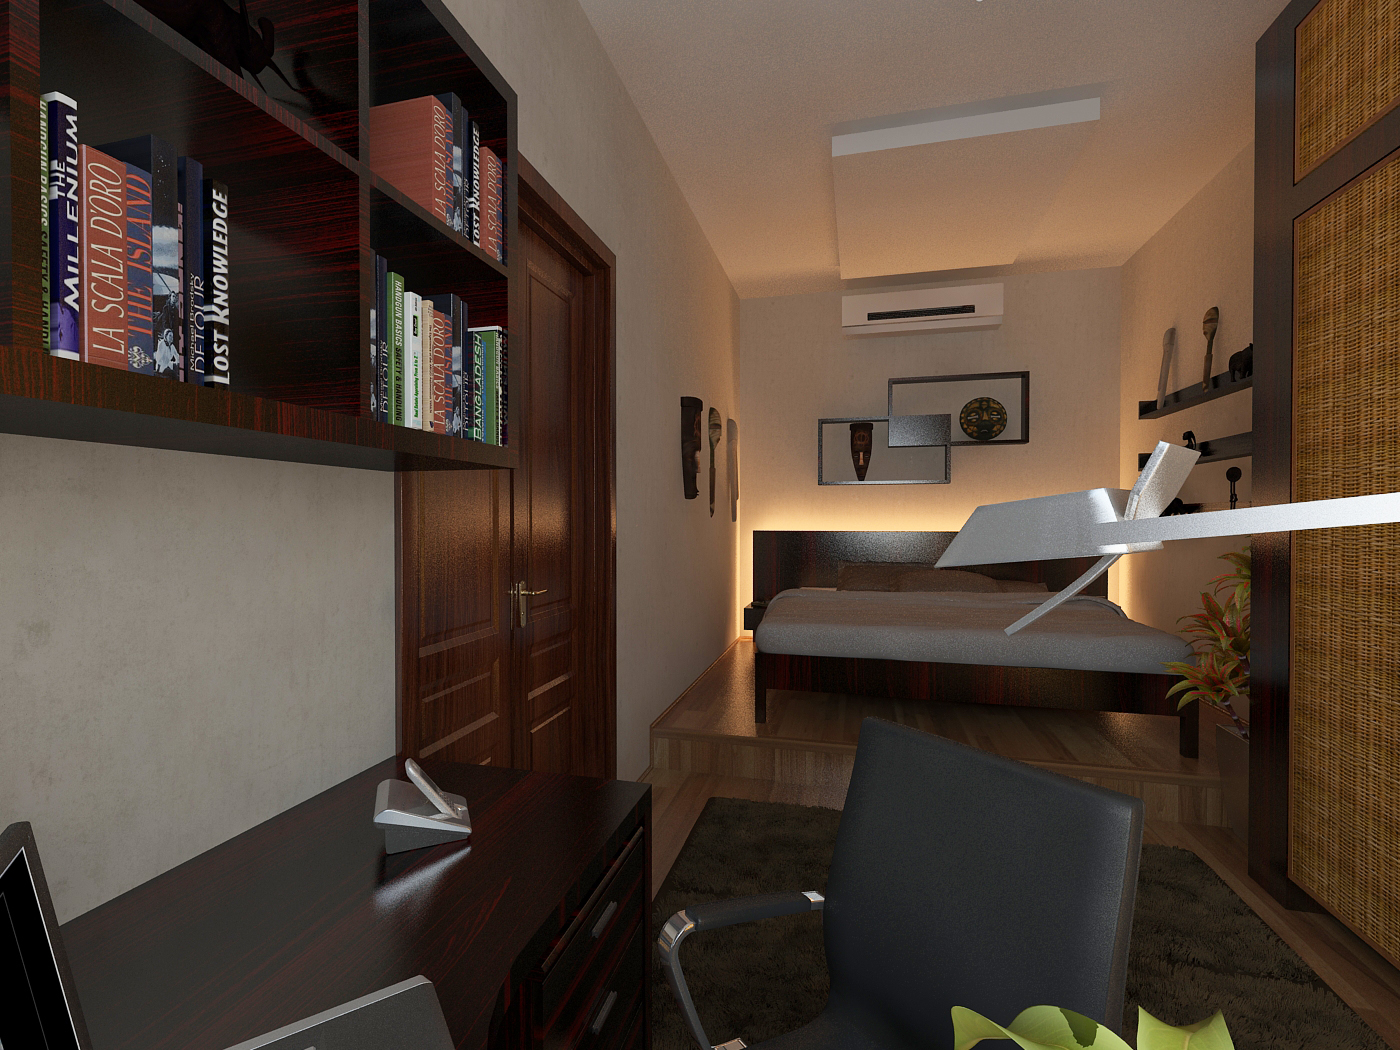 Hálószoba - terv / Bedroom - visualization